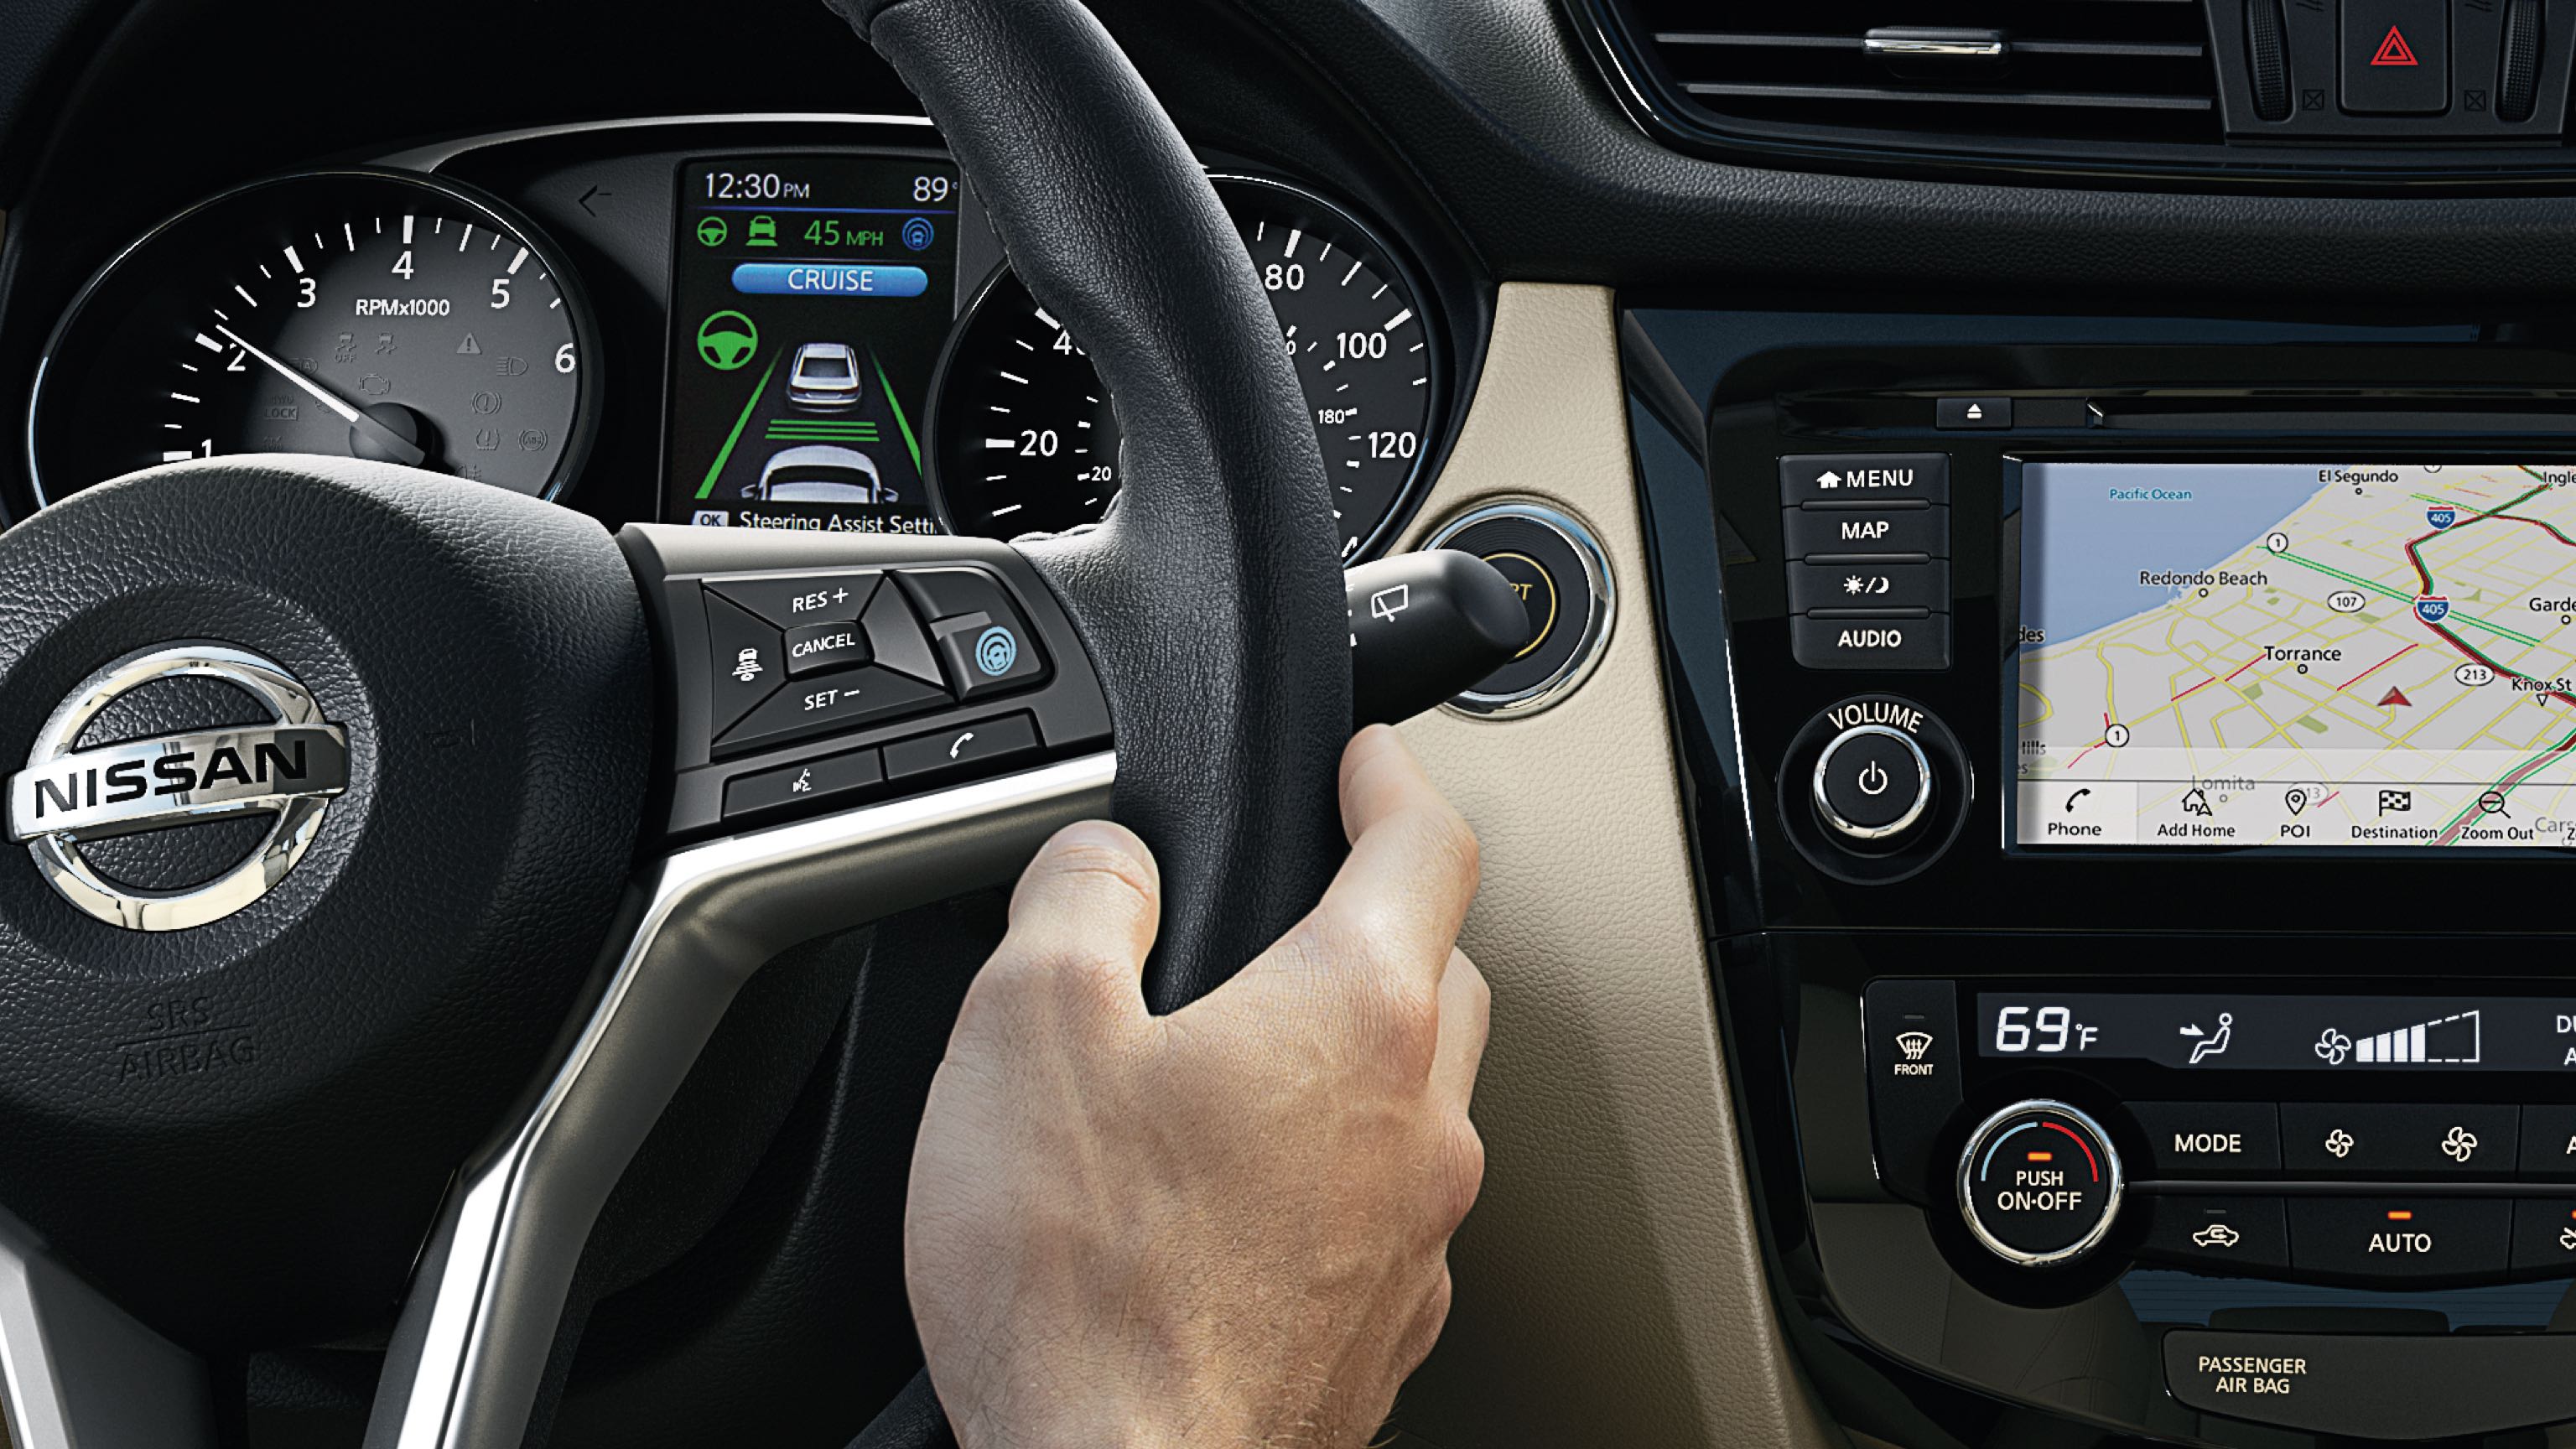 Nissan Intelligent Mobility steering wheel video thumbnail